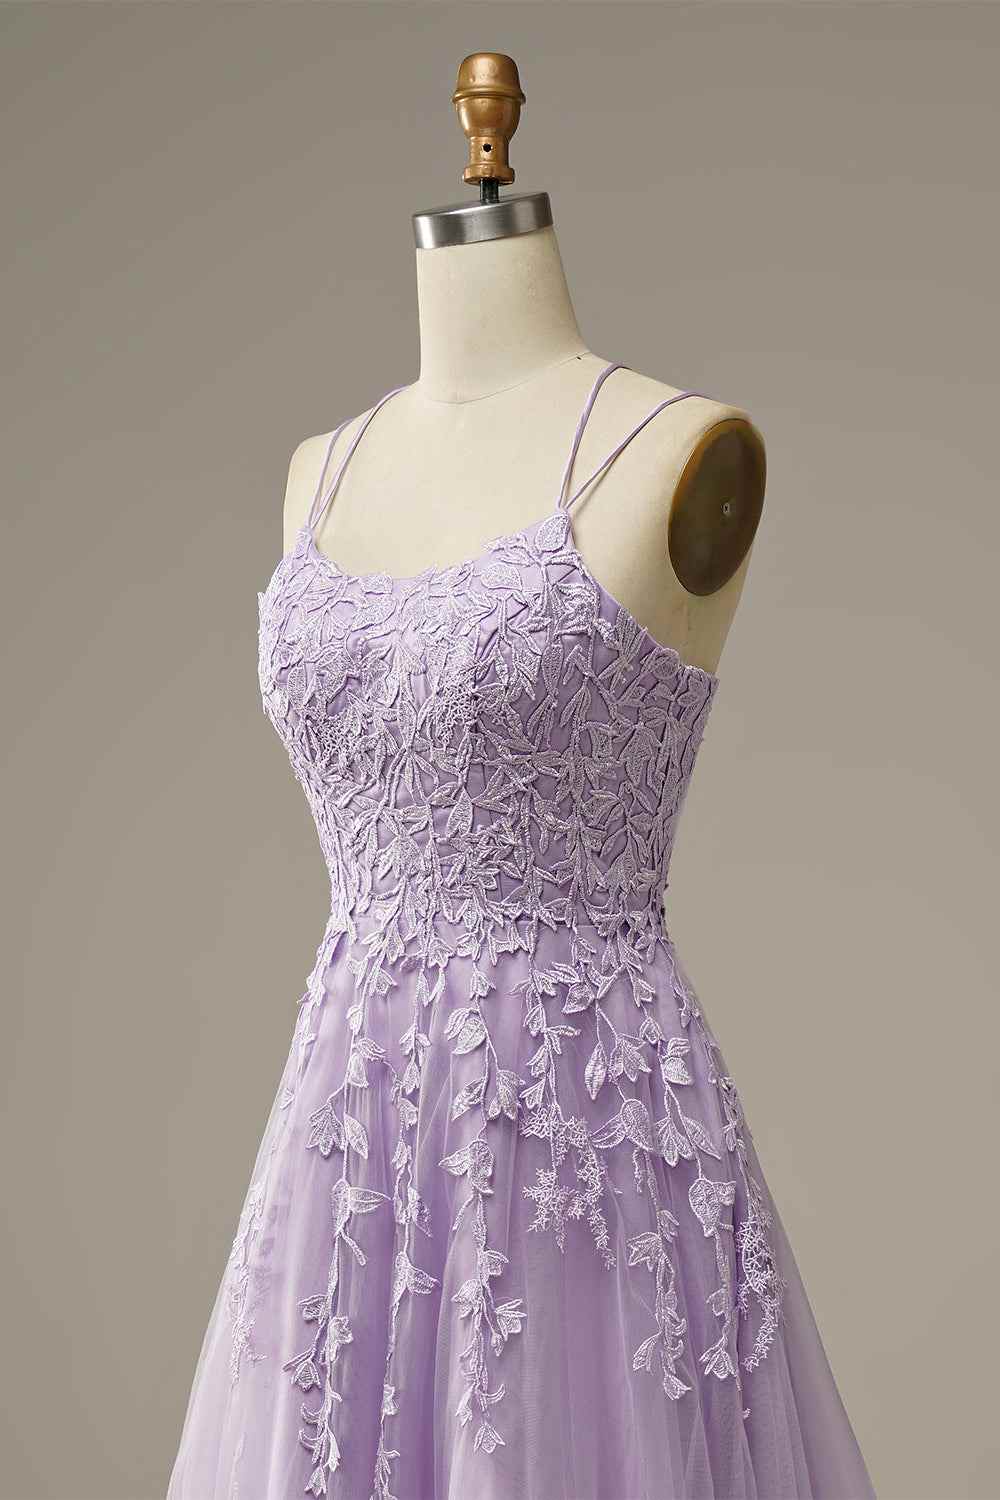 Lilac A-line Tulle Lace-up Back 3D Applique Long Prom Dress